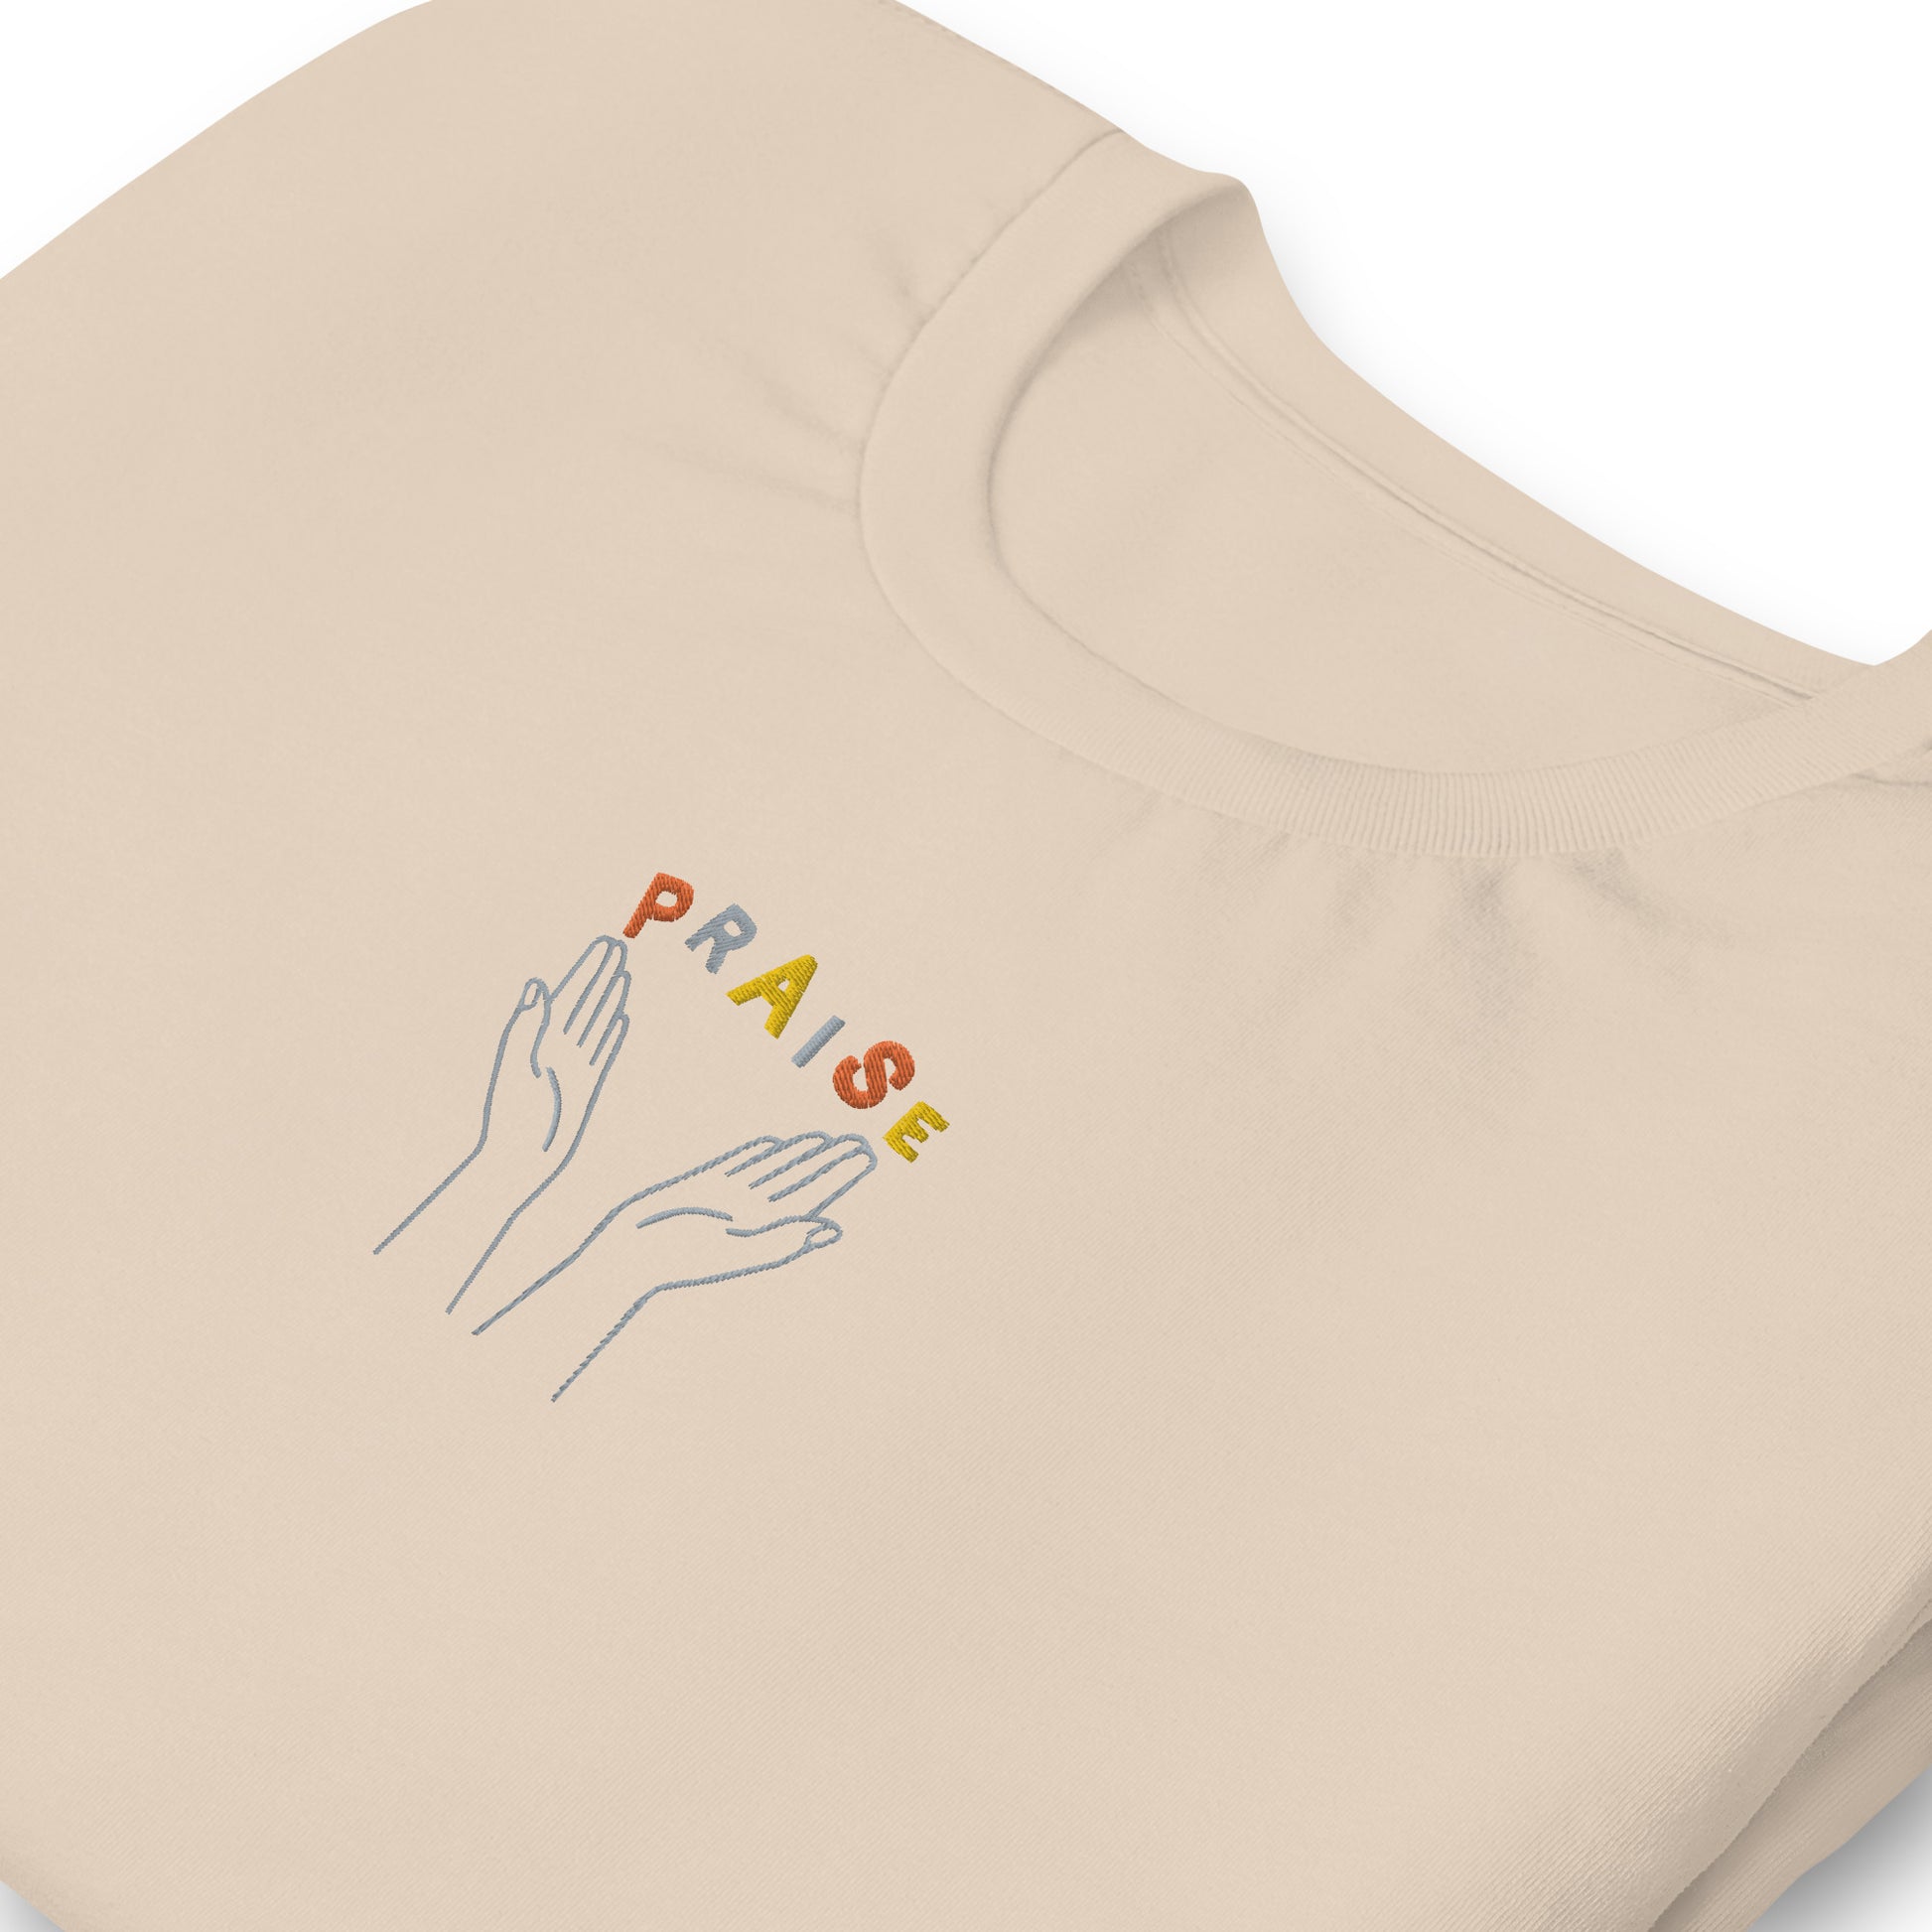 Praise Hands Embroidered T-shirt (center) - Shirts & Tops